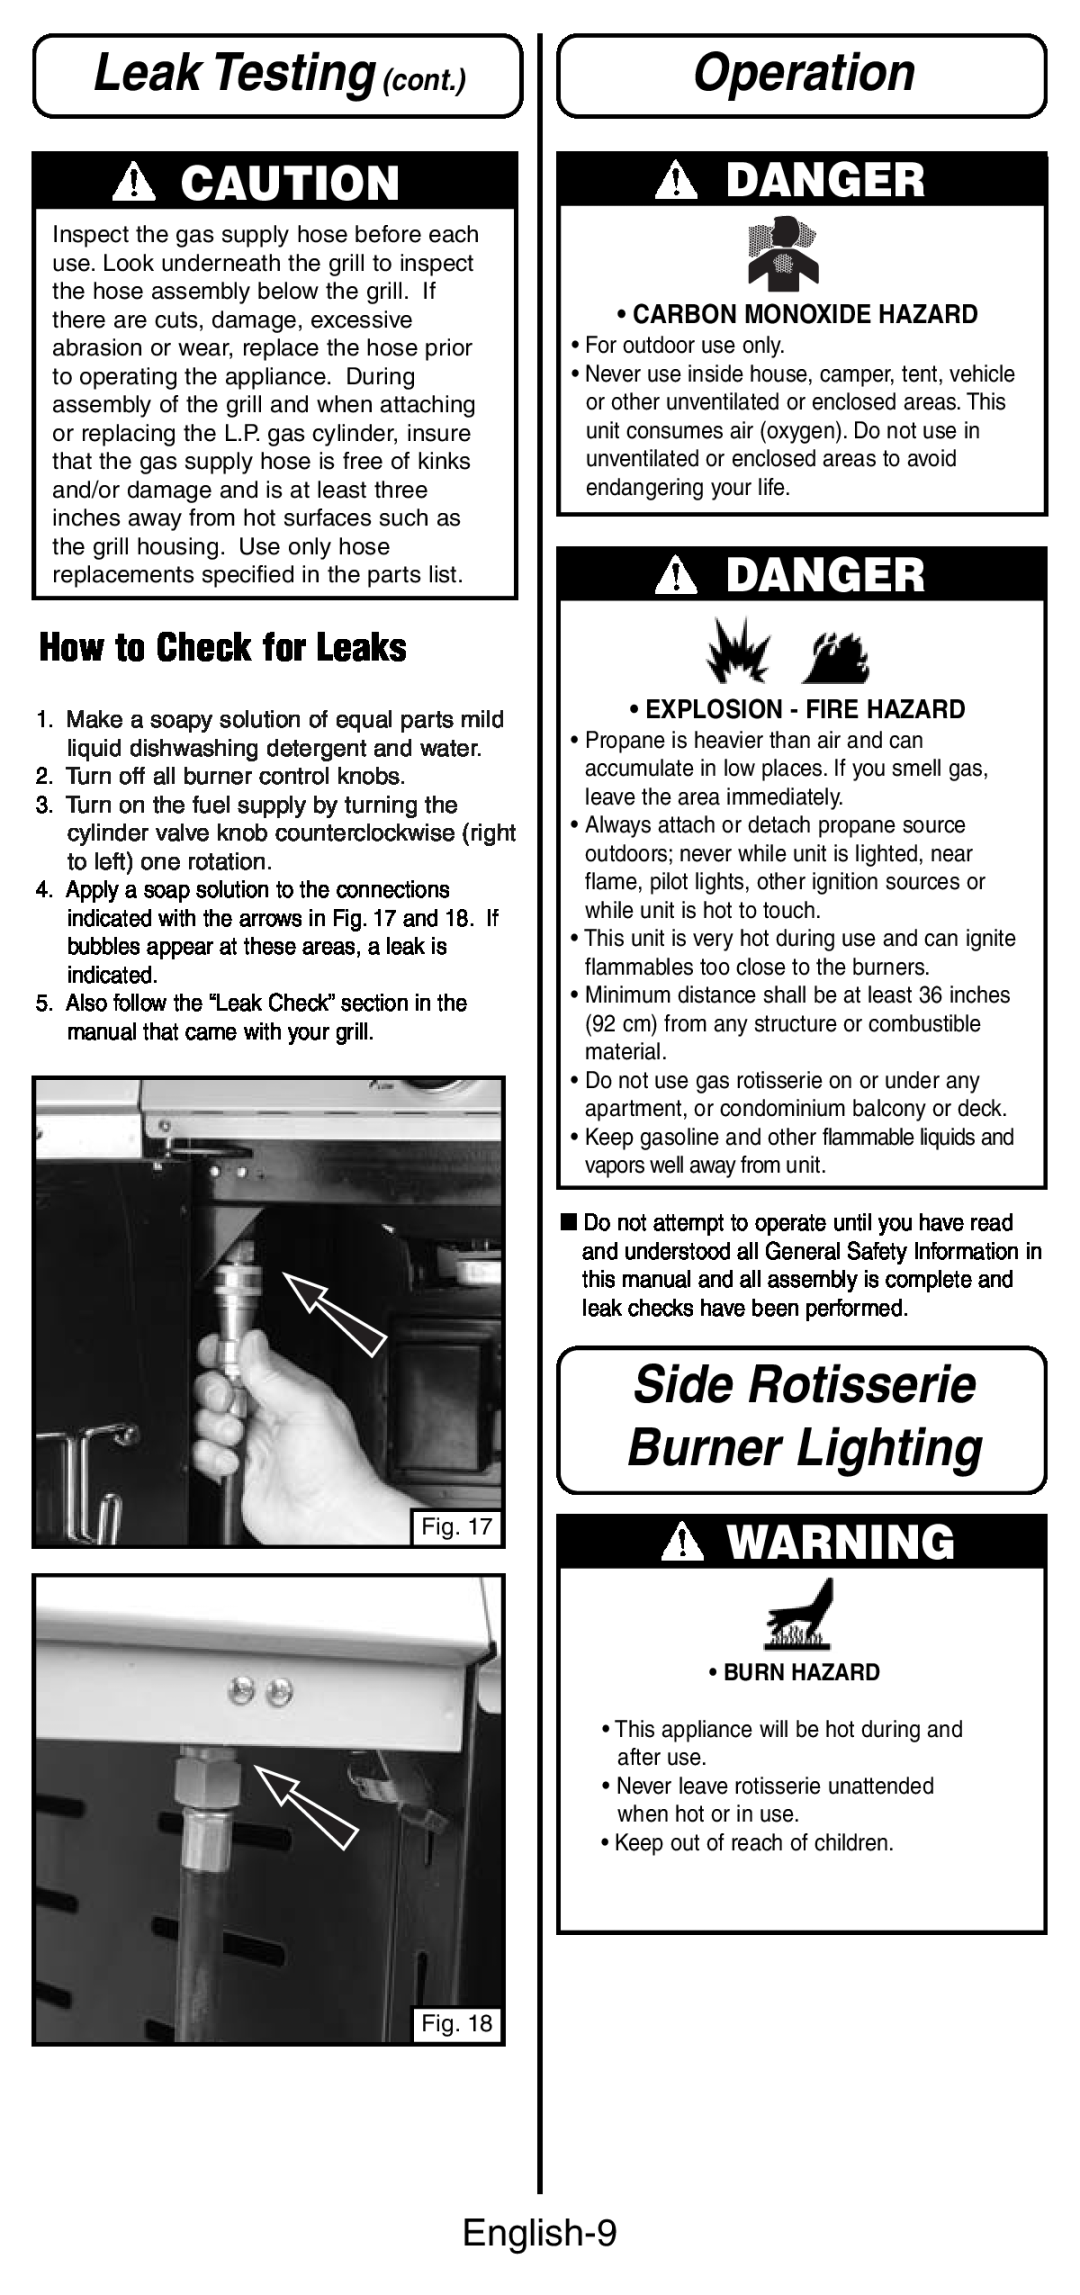 Coleman 9987 Series Leak Testing cont, Operation, Side Rotisserie Burner Lighting, Danger, English-9, Burn Hazard 